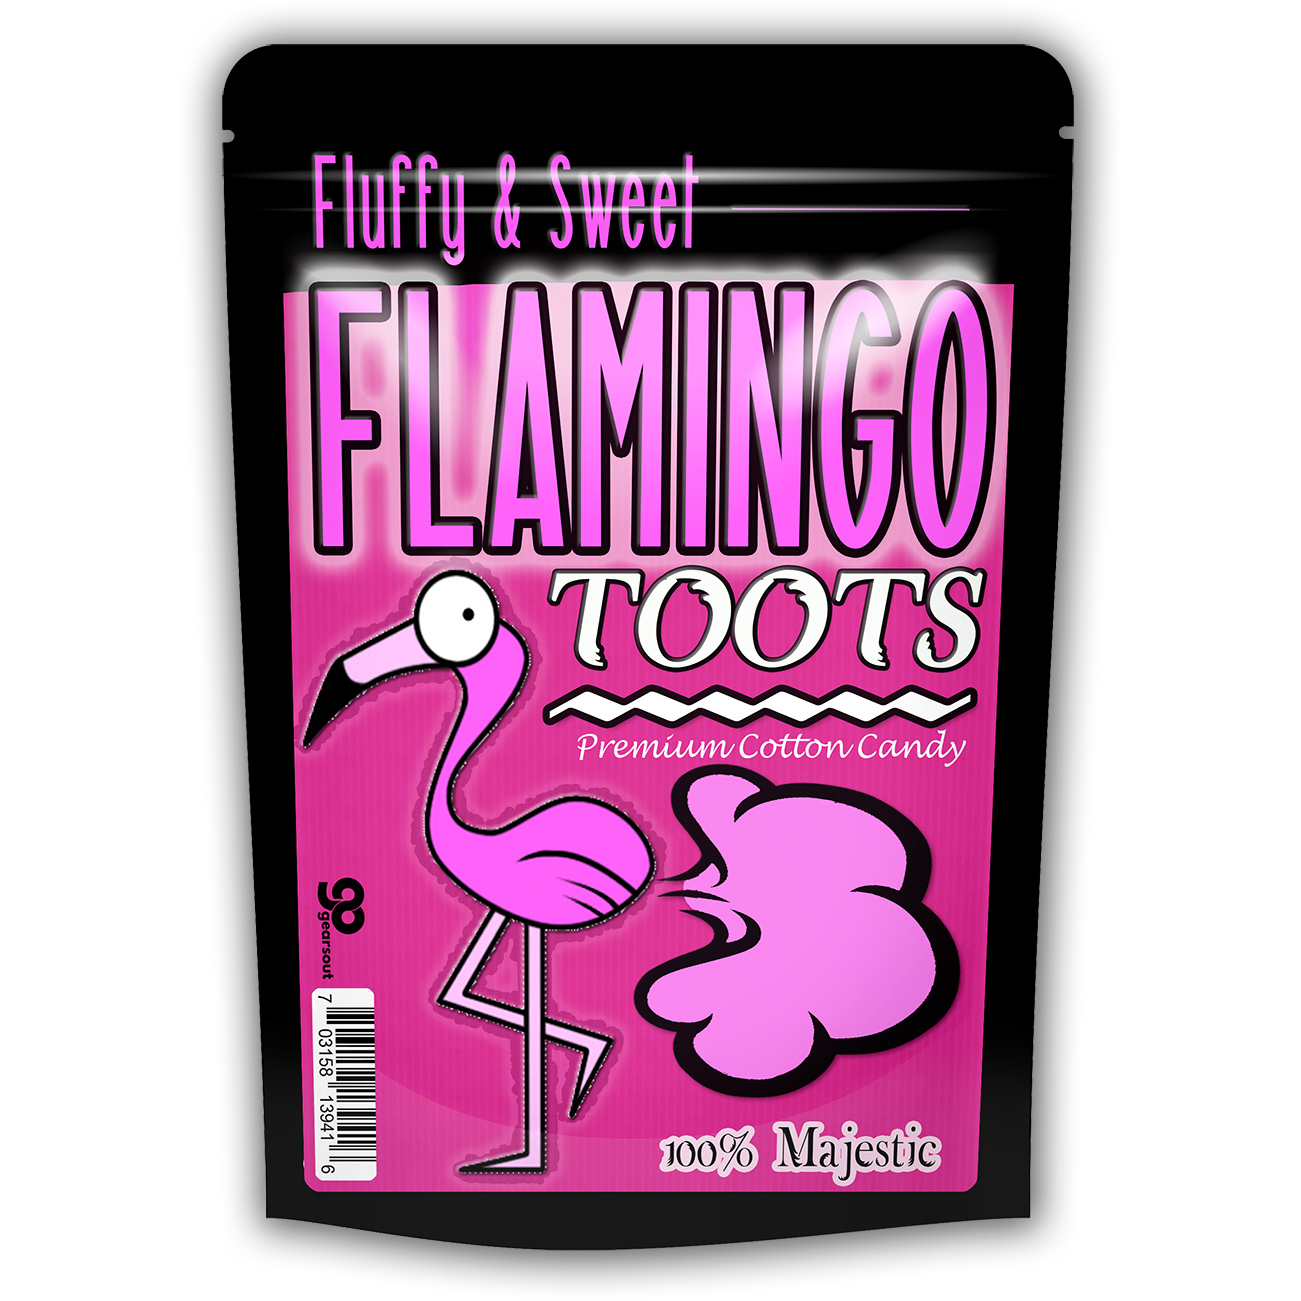 https://www.funslurp.com/images/Flamingo-Toots.jpg